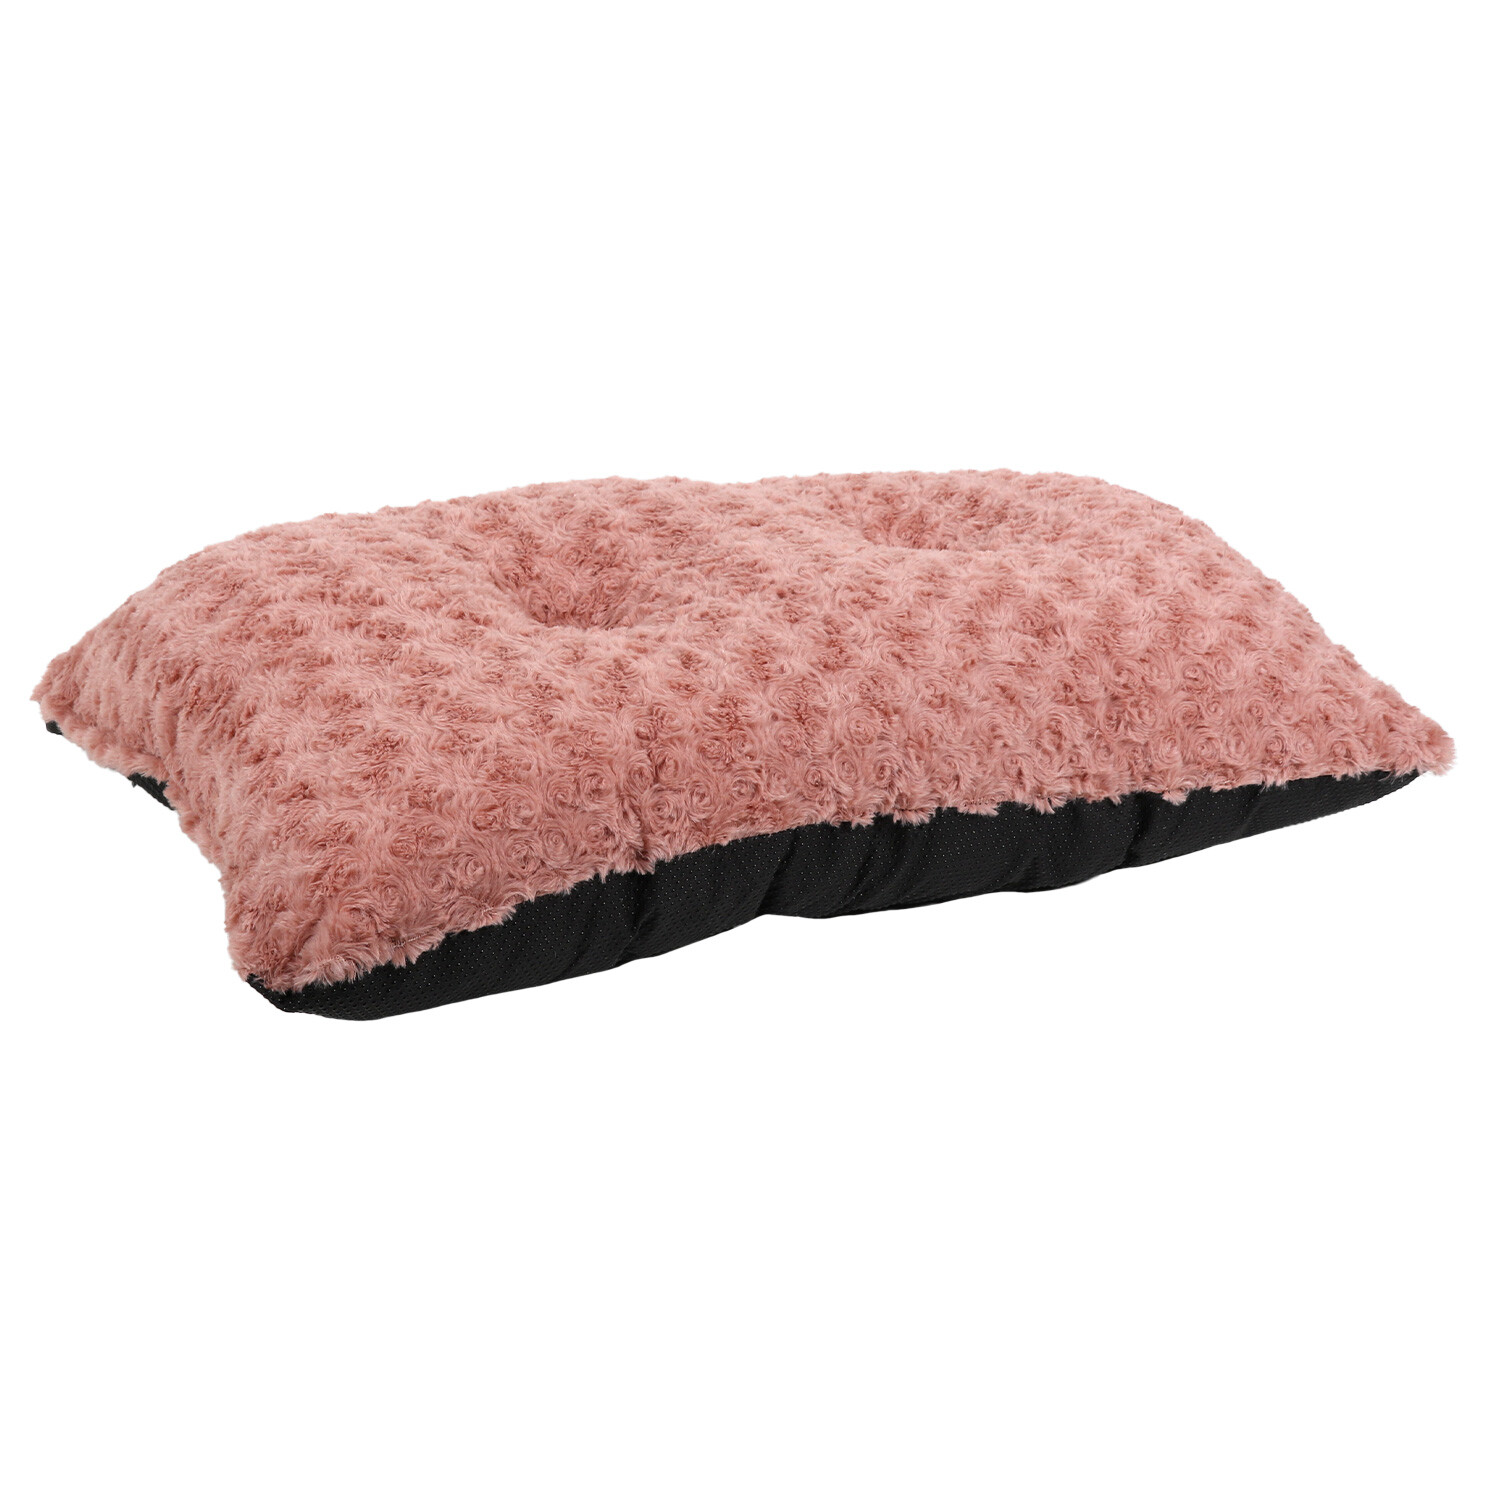 Swirly Pet Bed - Pink / Small Image 2